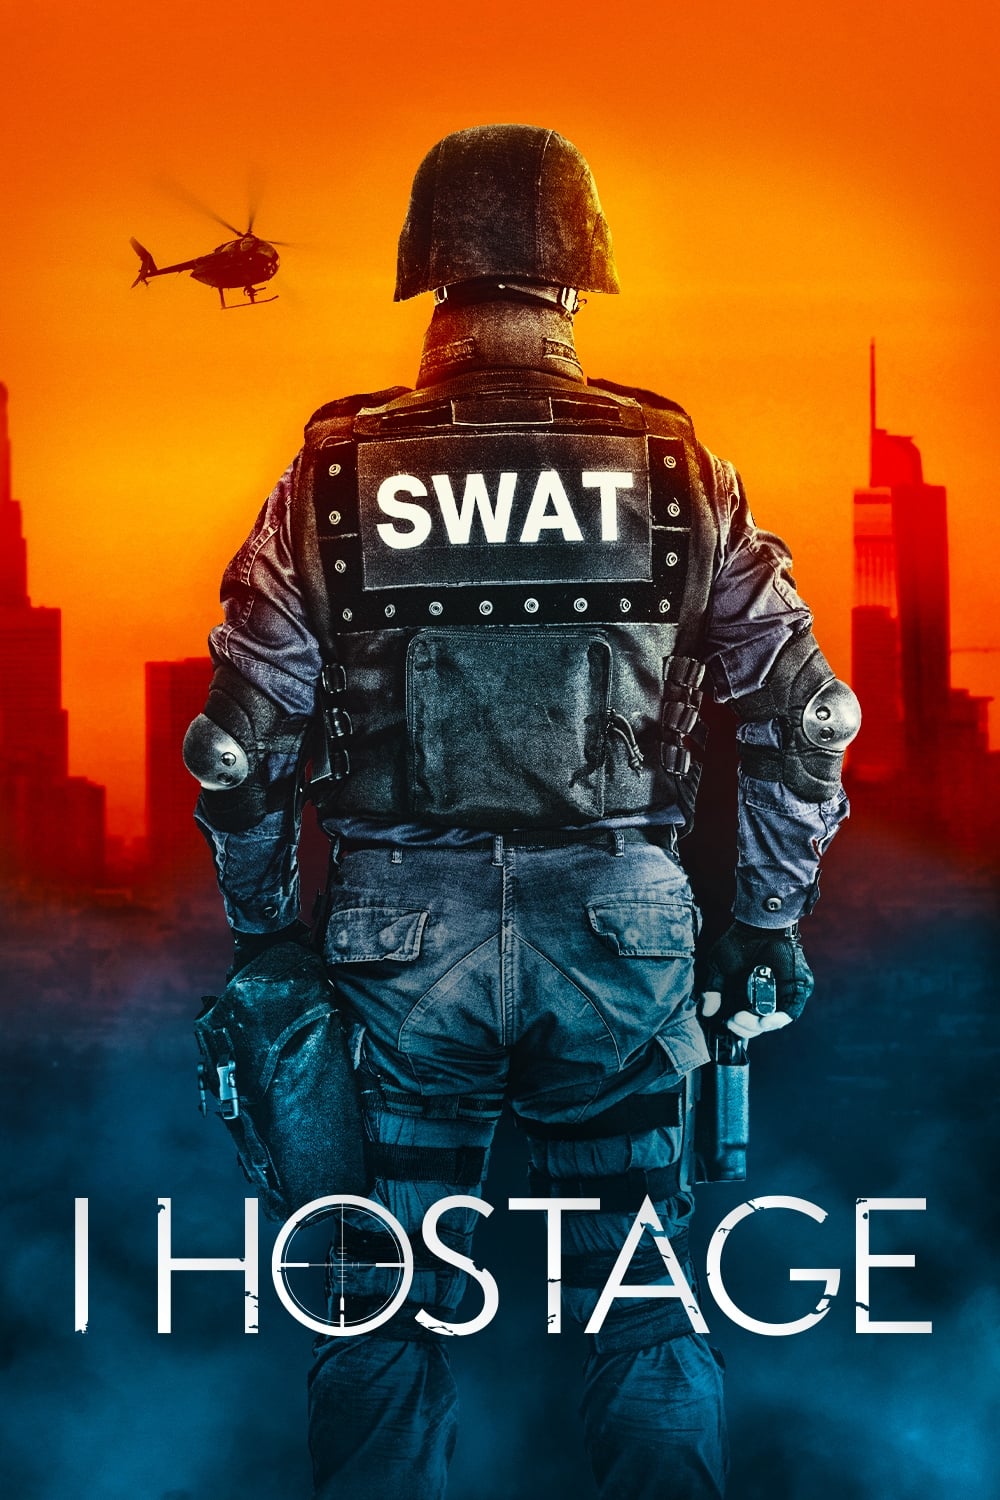 I, Hostage